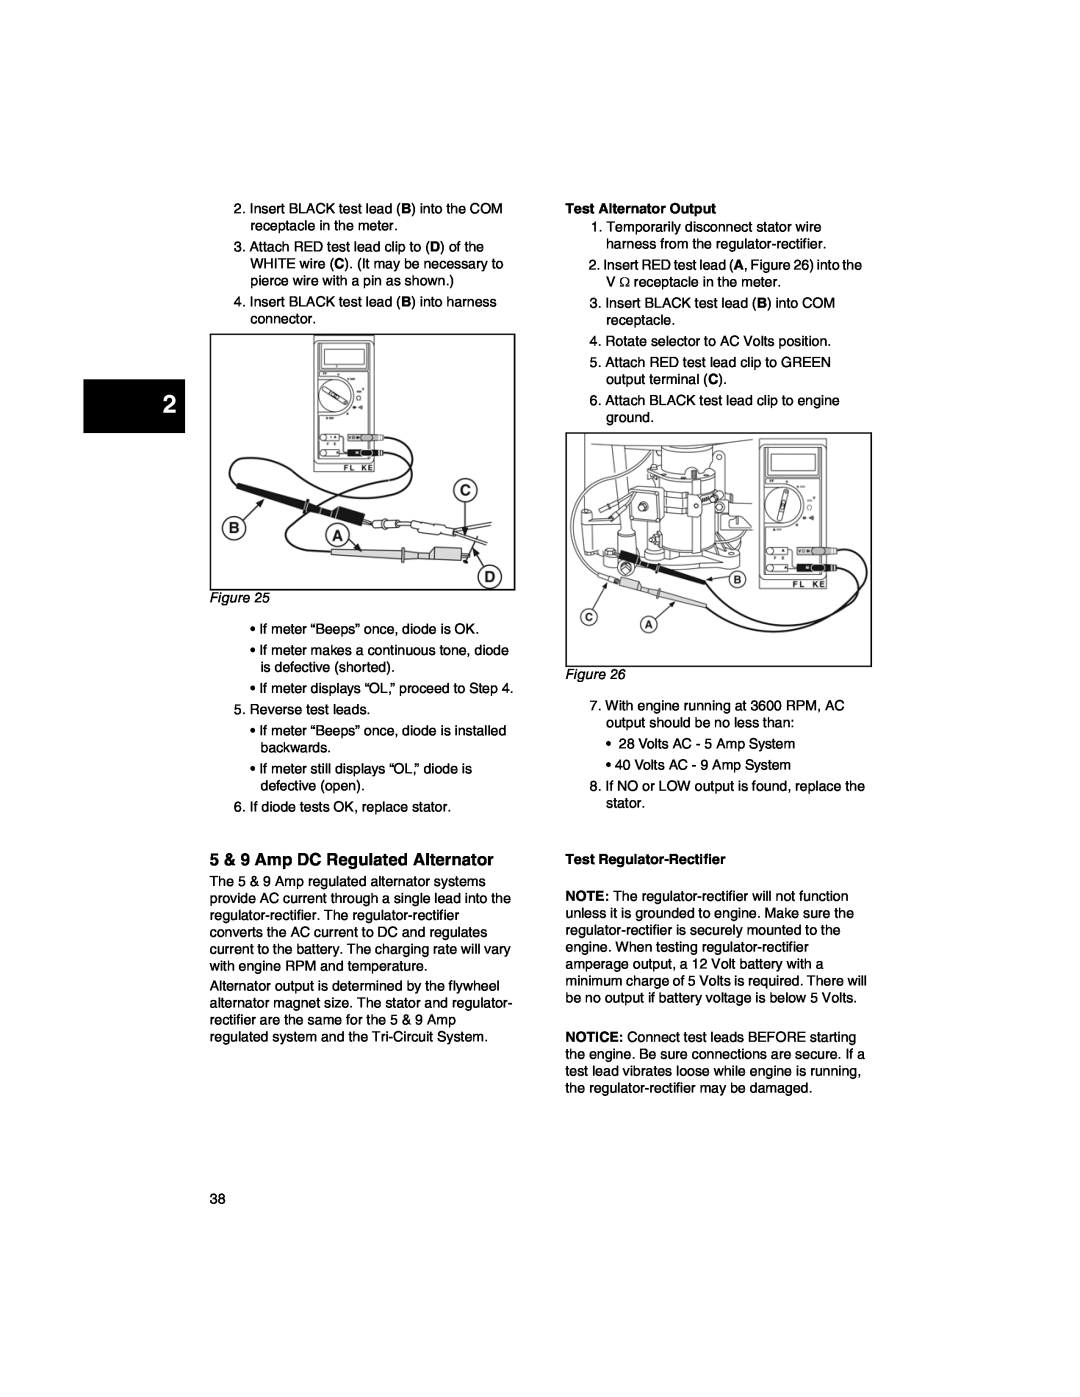 Briggs & Stratton 270962, 271172 manual 5 & 9 Amp DC Regulated Alternator, Test Alternator Output, Test Regulator-Rectifier 